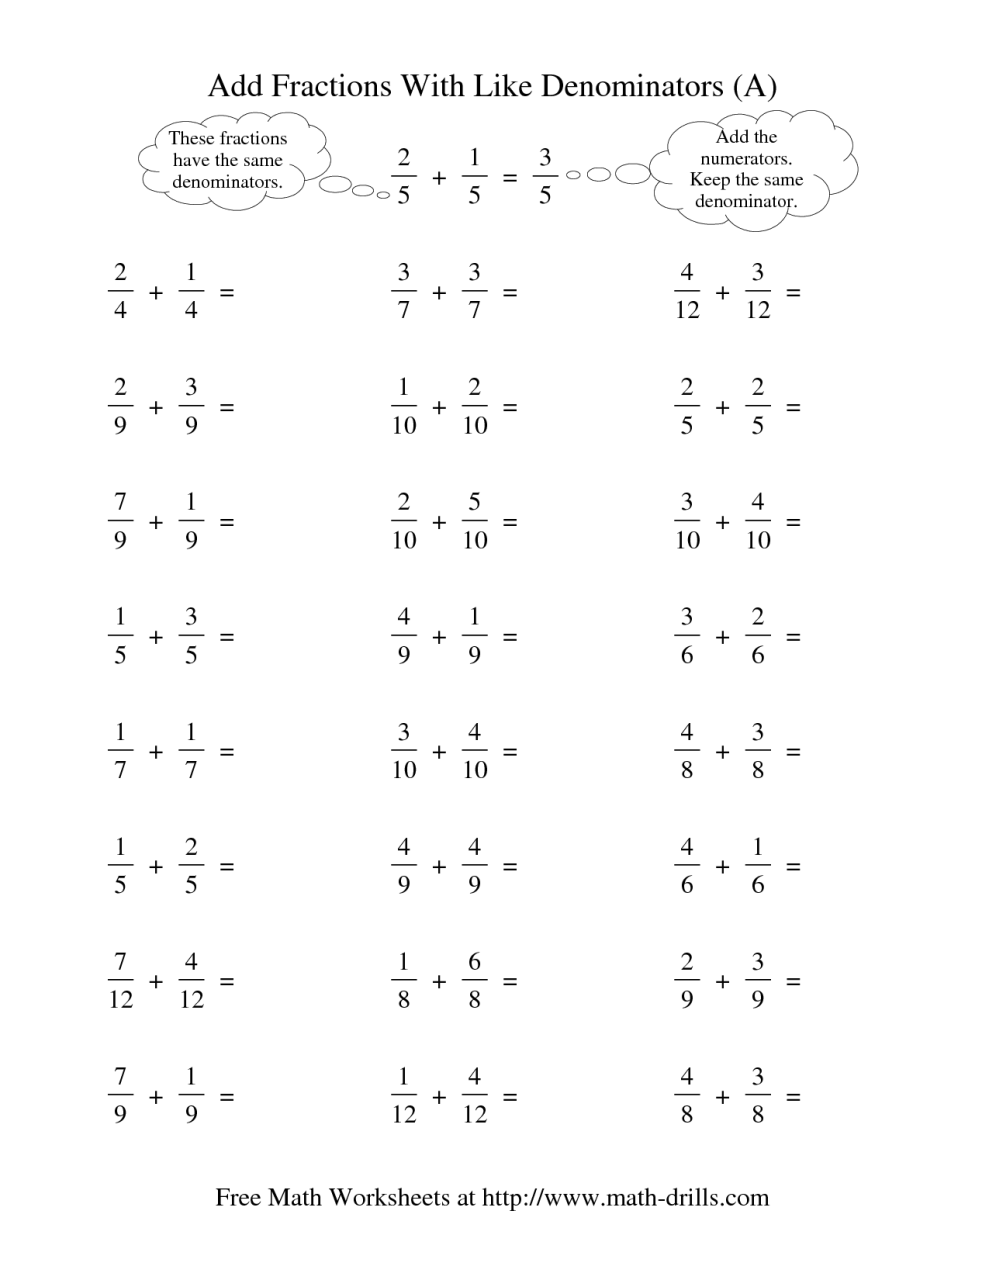 Adding Unlike Fractions Worksheet Grade 6